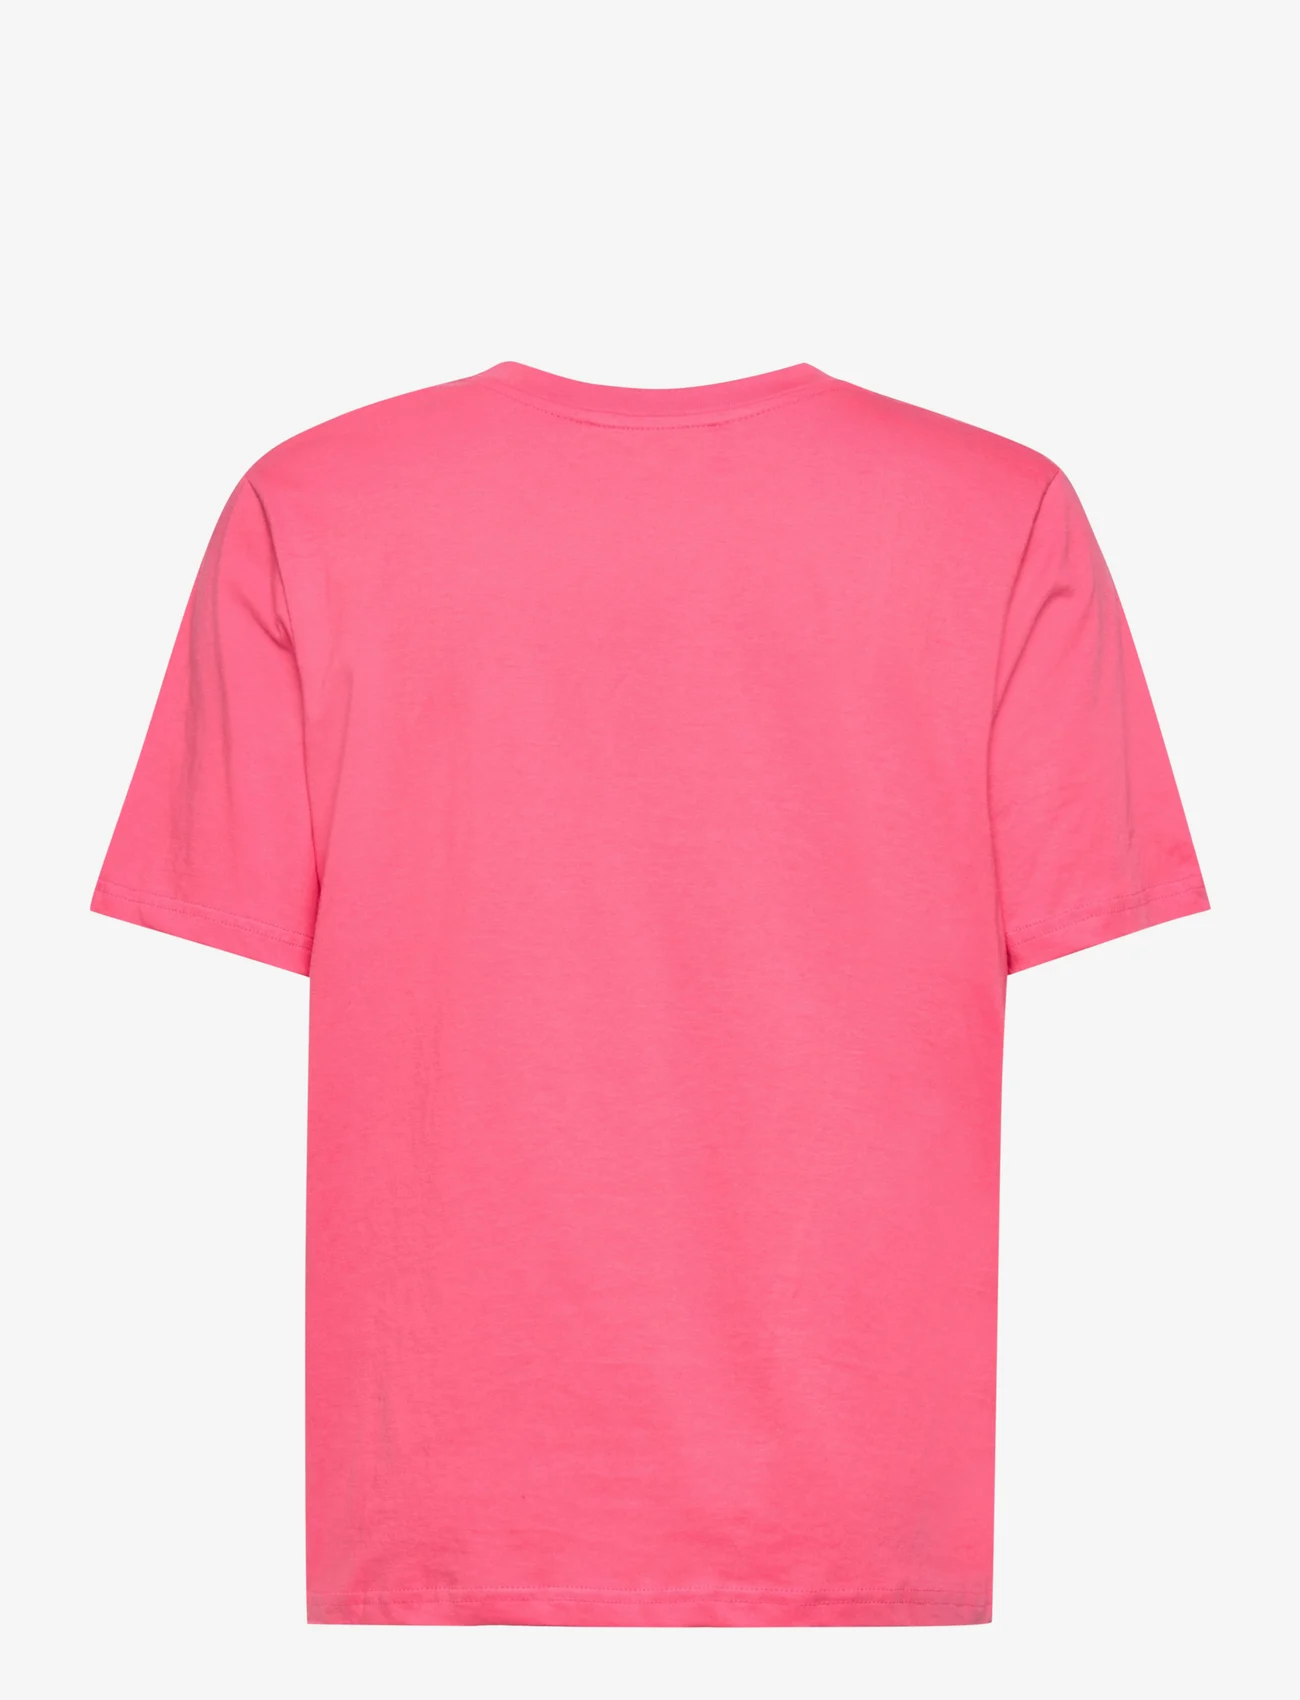 Minus - Cathy Gots Tee - t-shirts - pink flamingo - 1